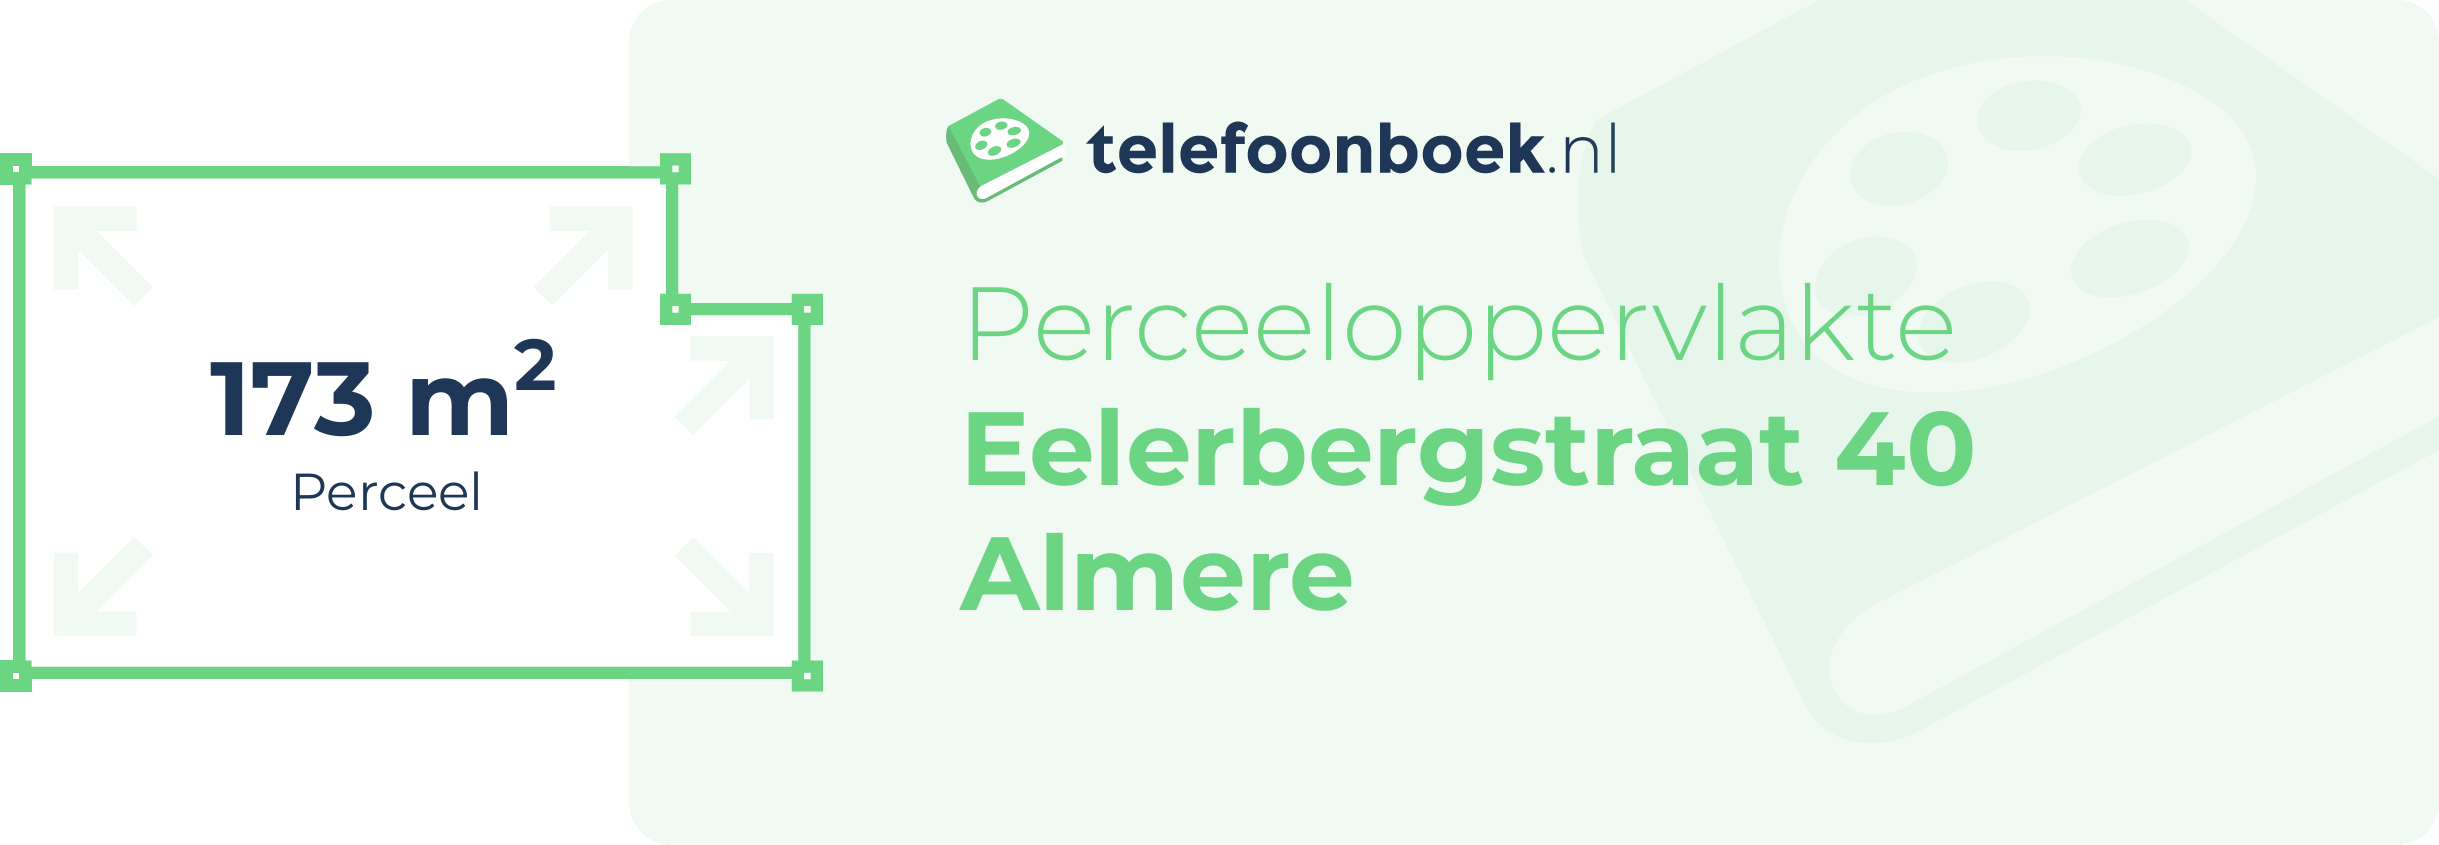 Perceeloppervlakte Eelerbergstraat 40 Almere